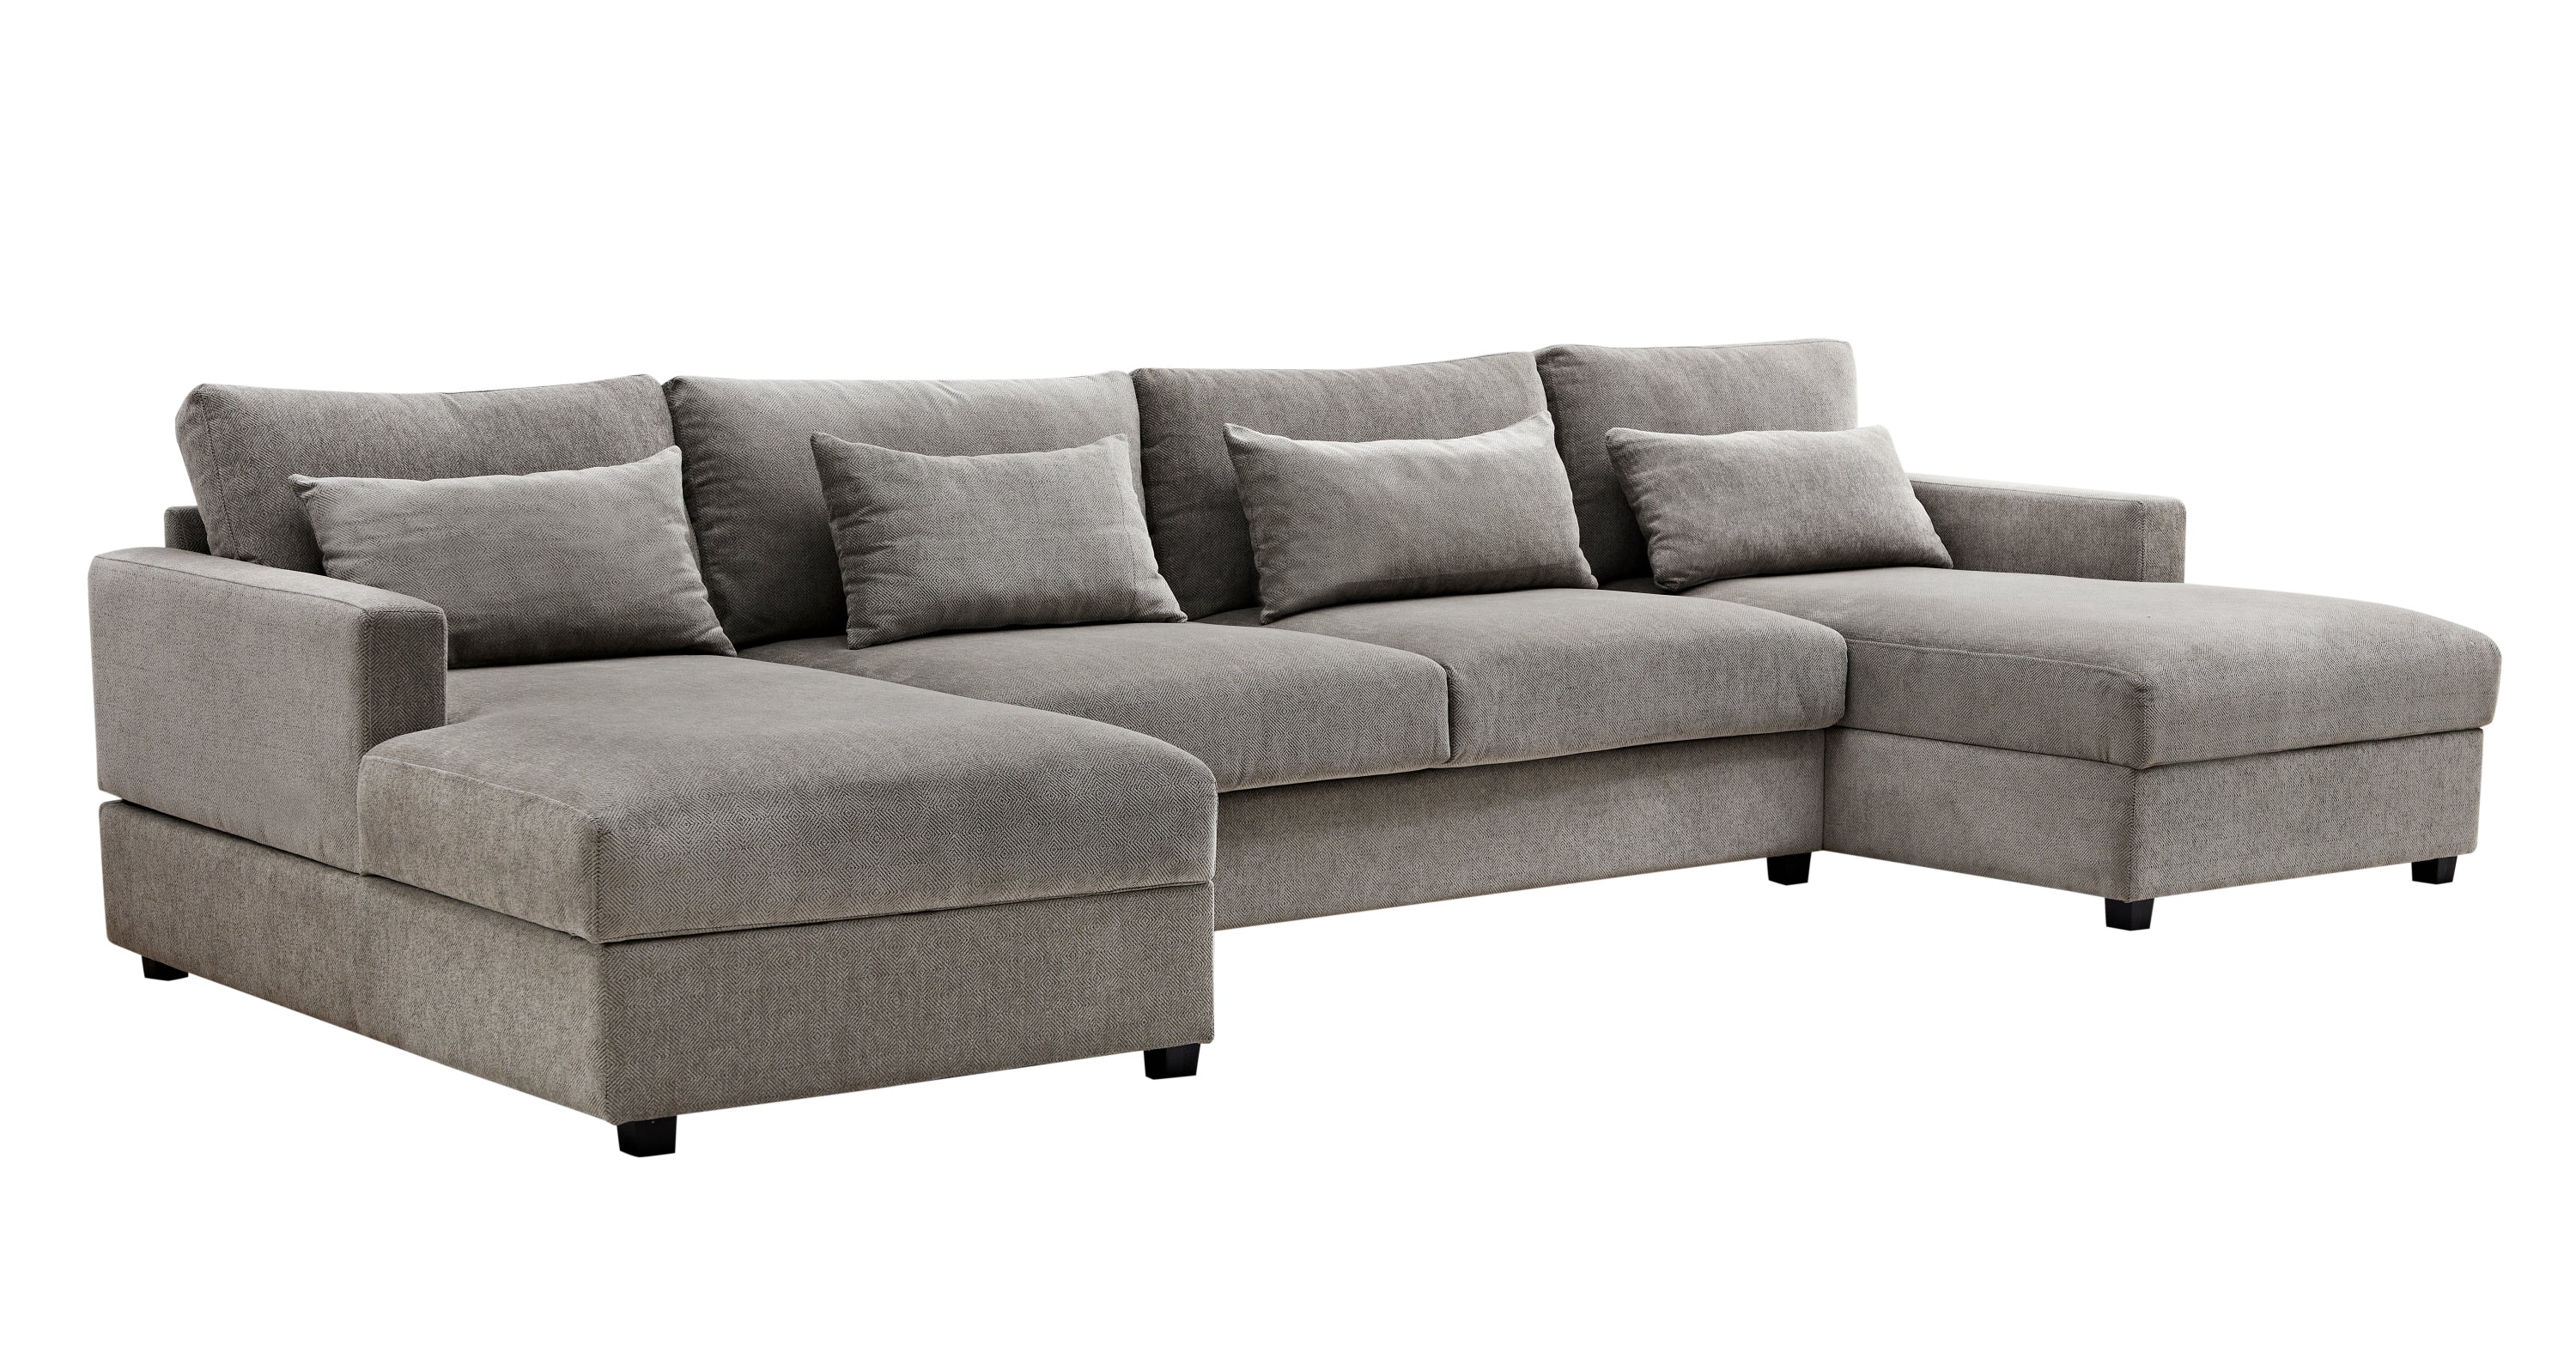 Large U-Shaped Sectional Sofa: Gray | 2 Chaises, Storage, Lumbar Pillows